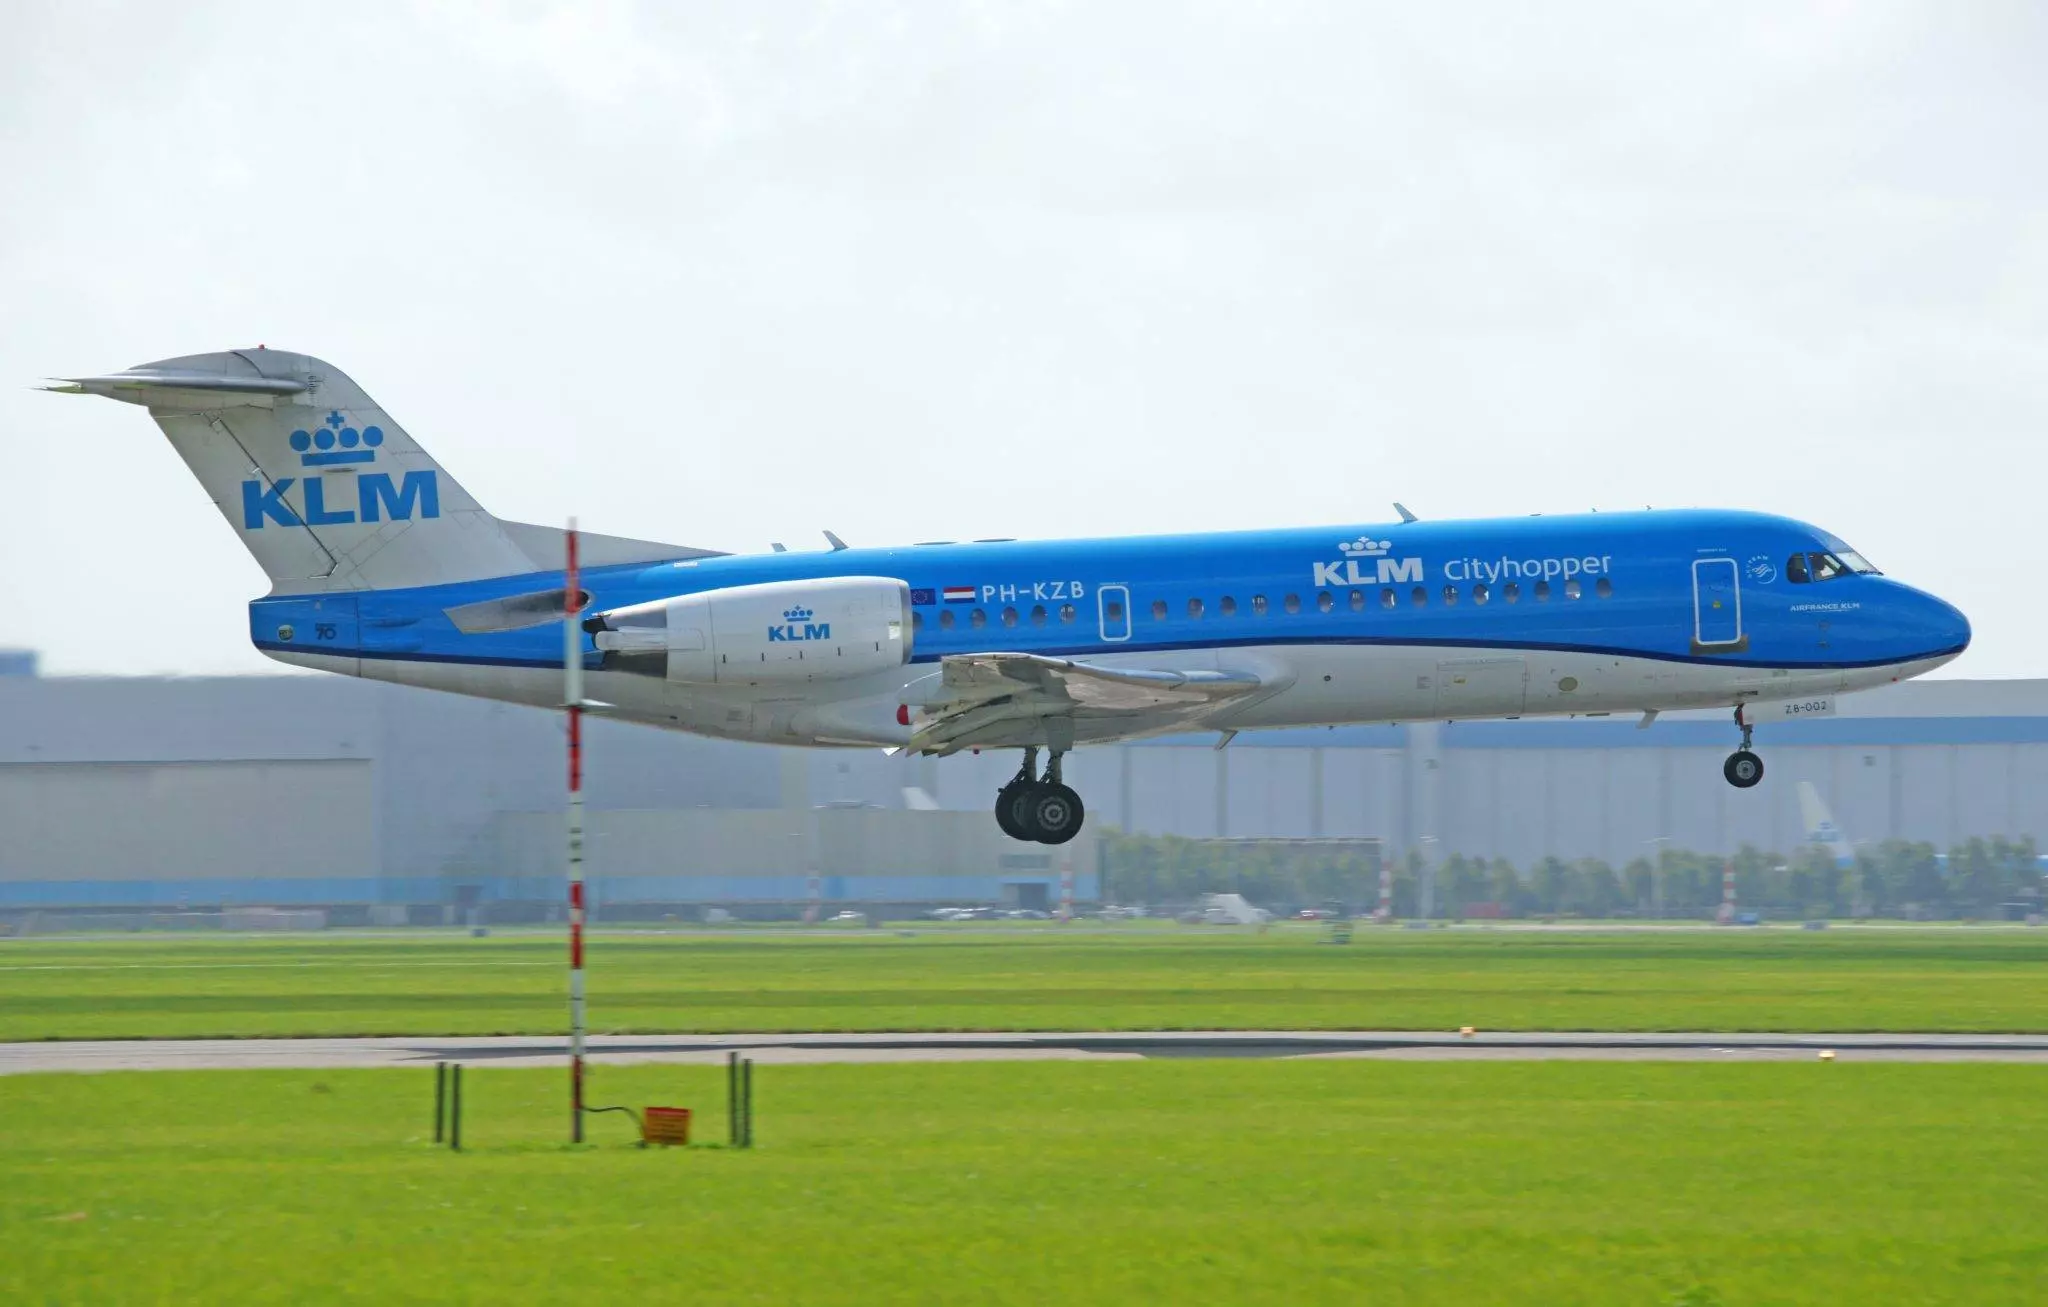 Klm royal dutch airlines — aeronautica.online